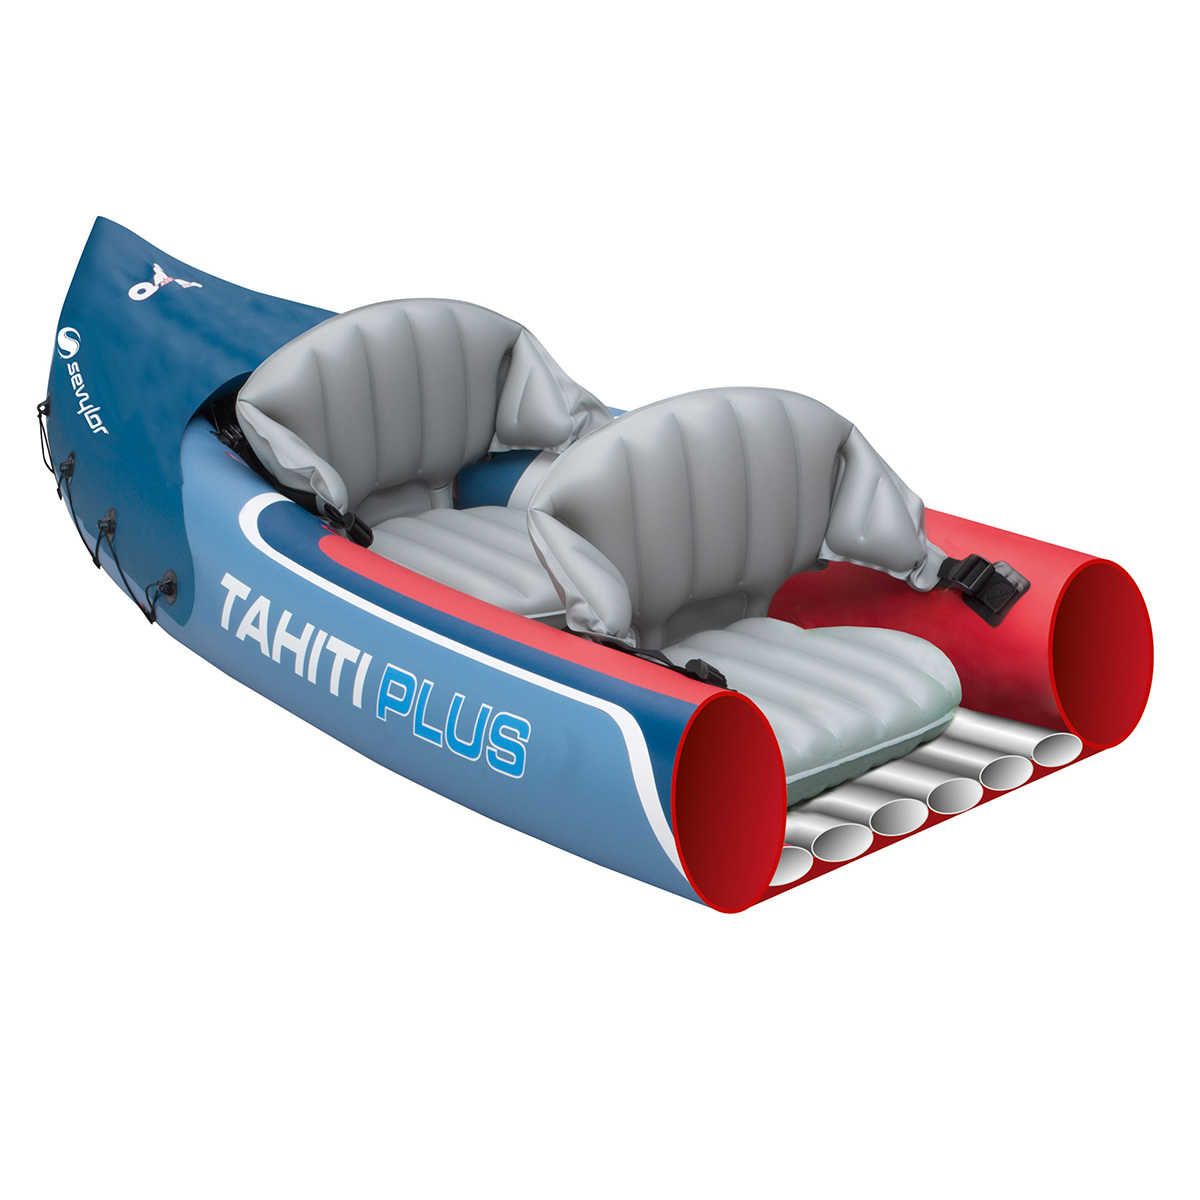 Kayak Gonflable Tahiti Plus - 2 adultes + 1 enfant - Rouge / Bleu